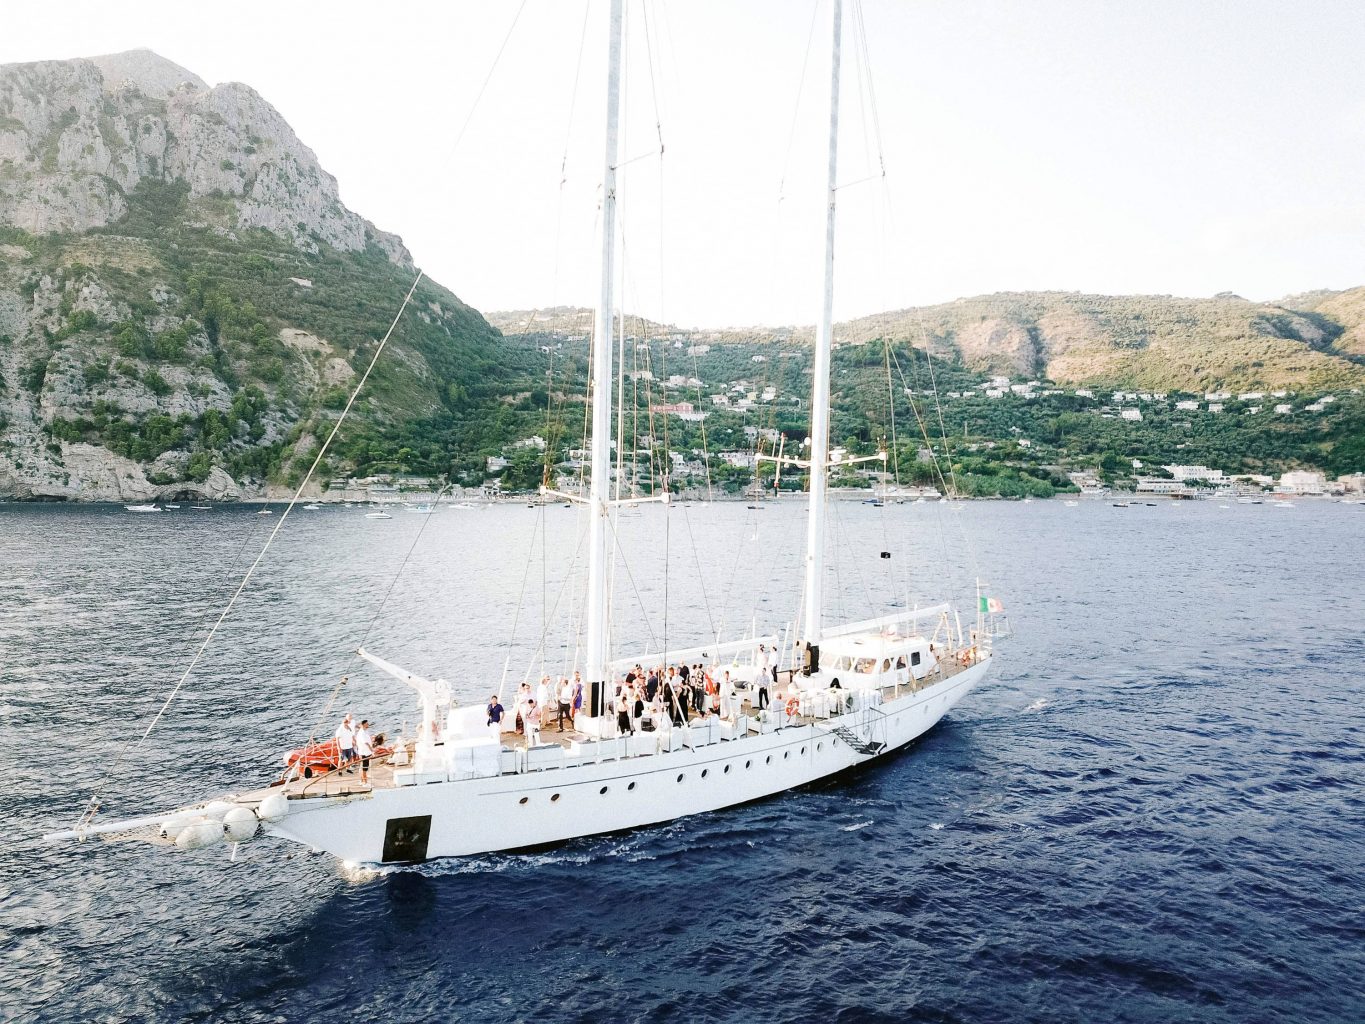 Sunset sail to Capri at this Amalfi Coast wedding weekend held Lo Scoglio | Photo by Allan Zepeda